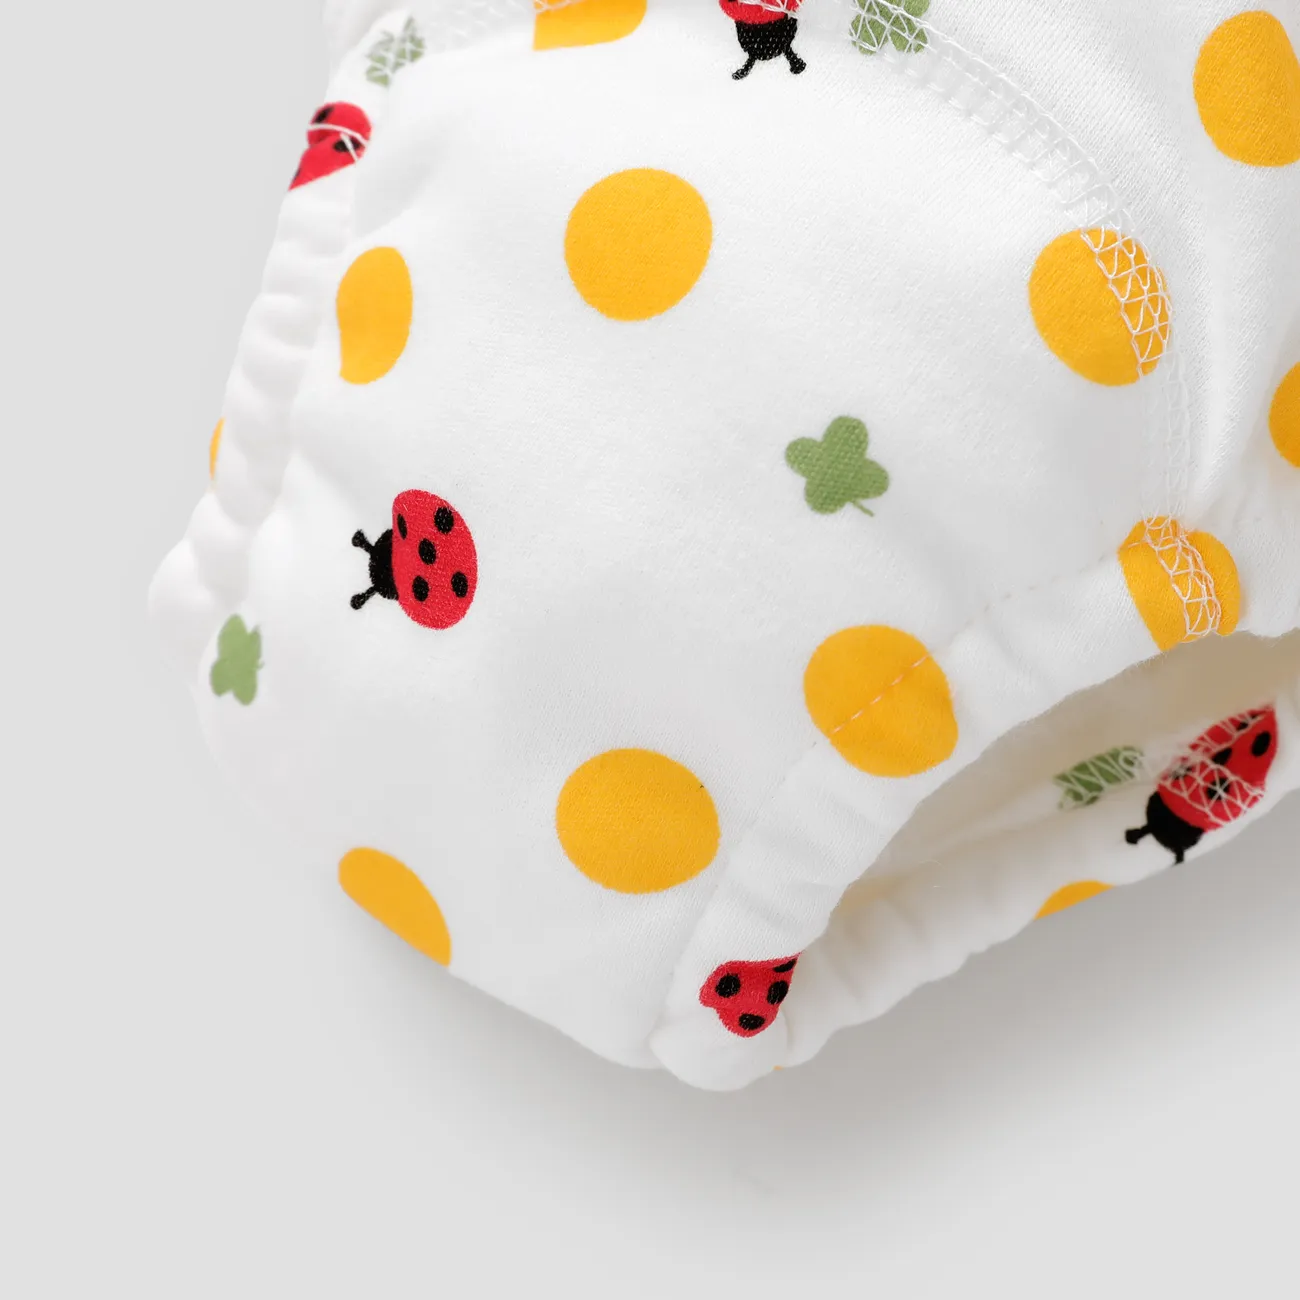 Baby/Toddler Boys/Girls Childlike Animal Pattern Underwear Set Color block big image 1